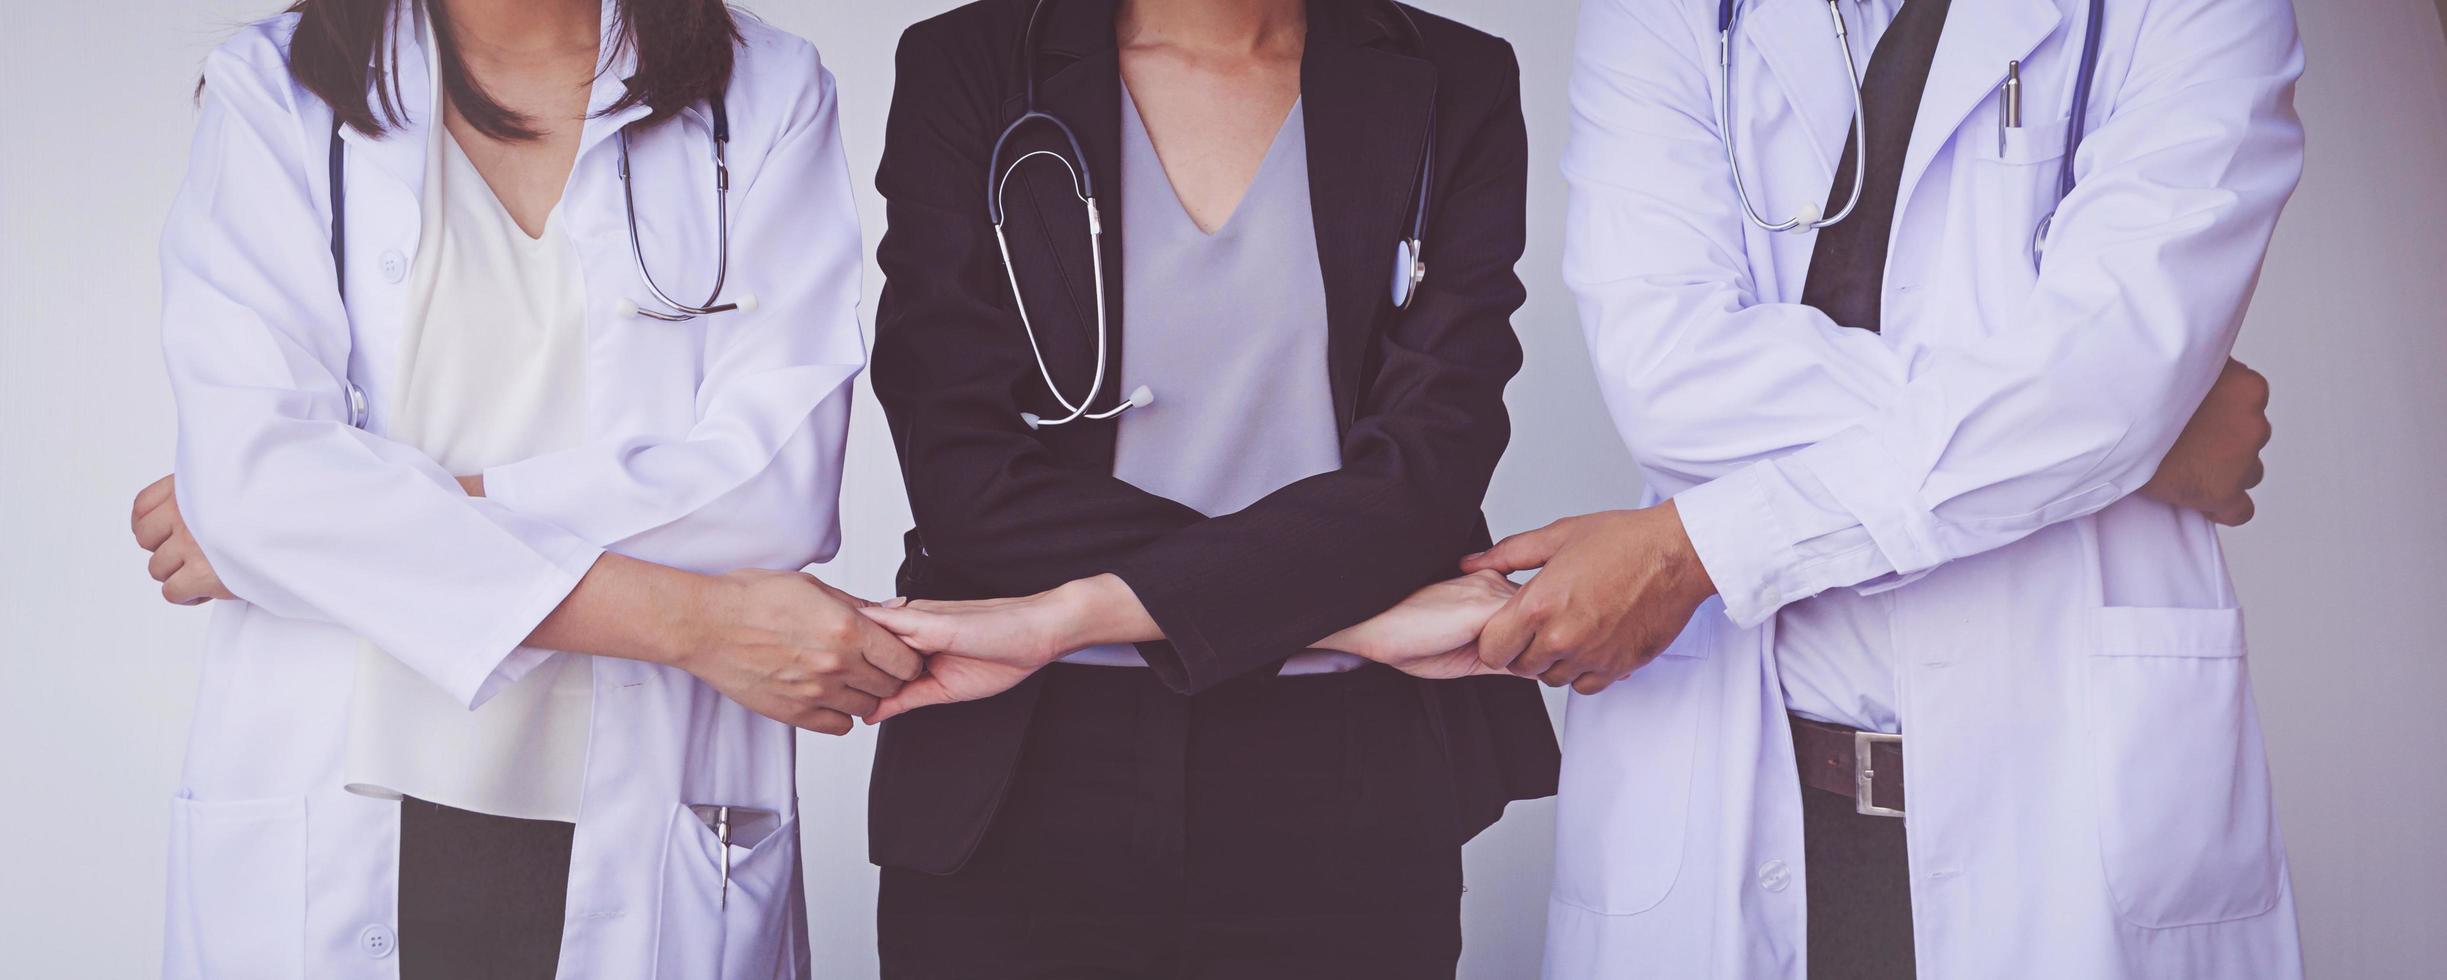 Doctors and Nurses coordinate hands. Concept Teamwork photo